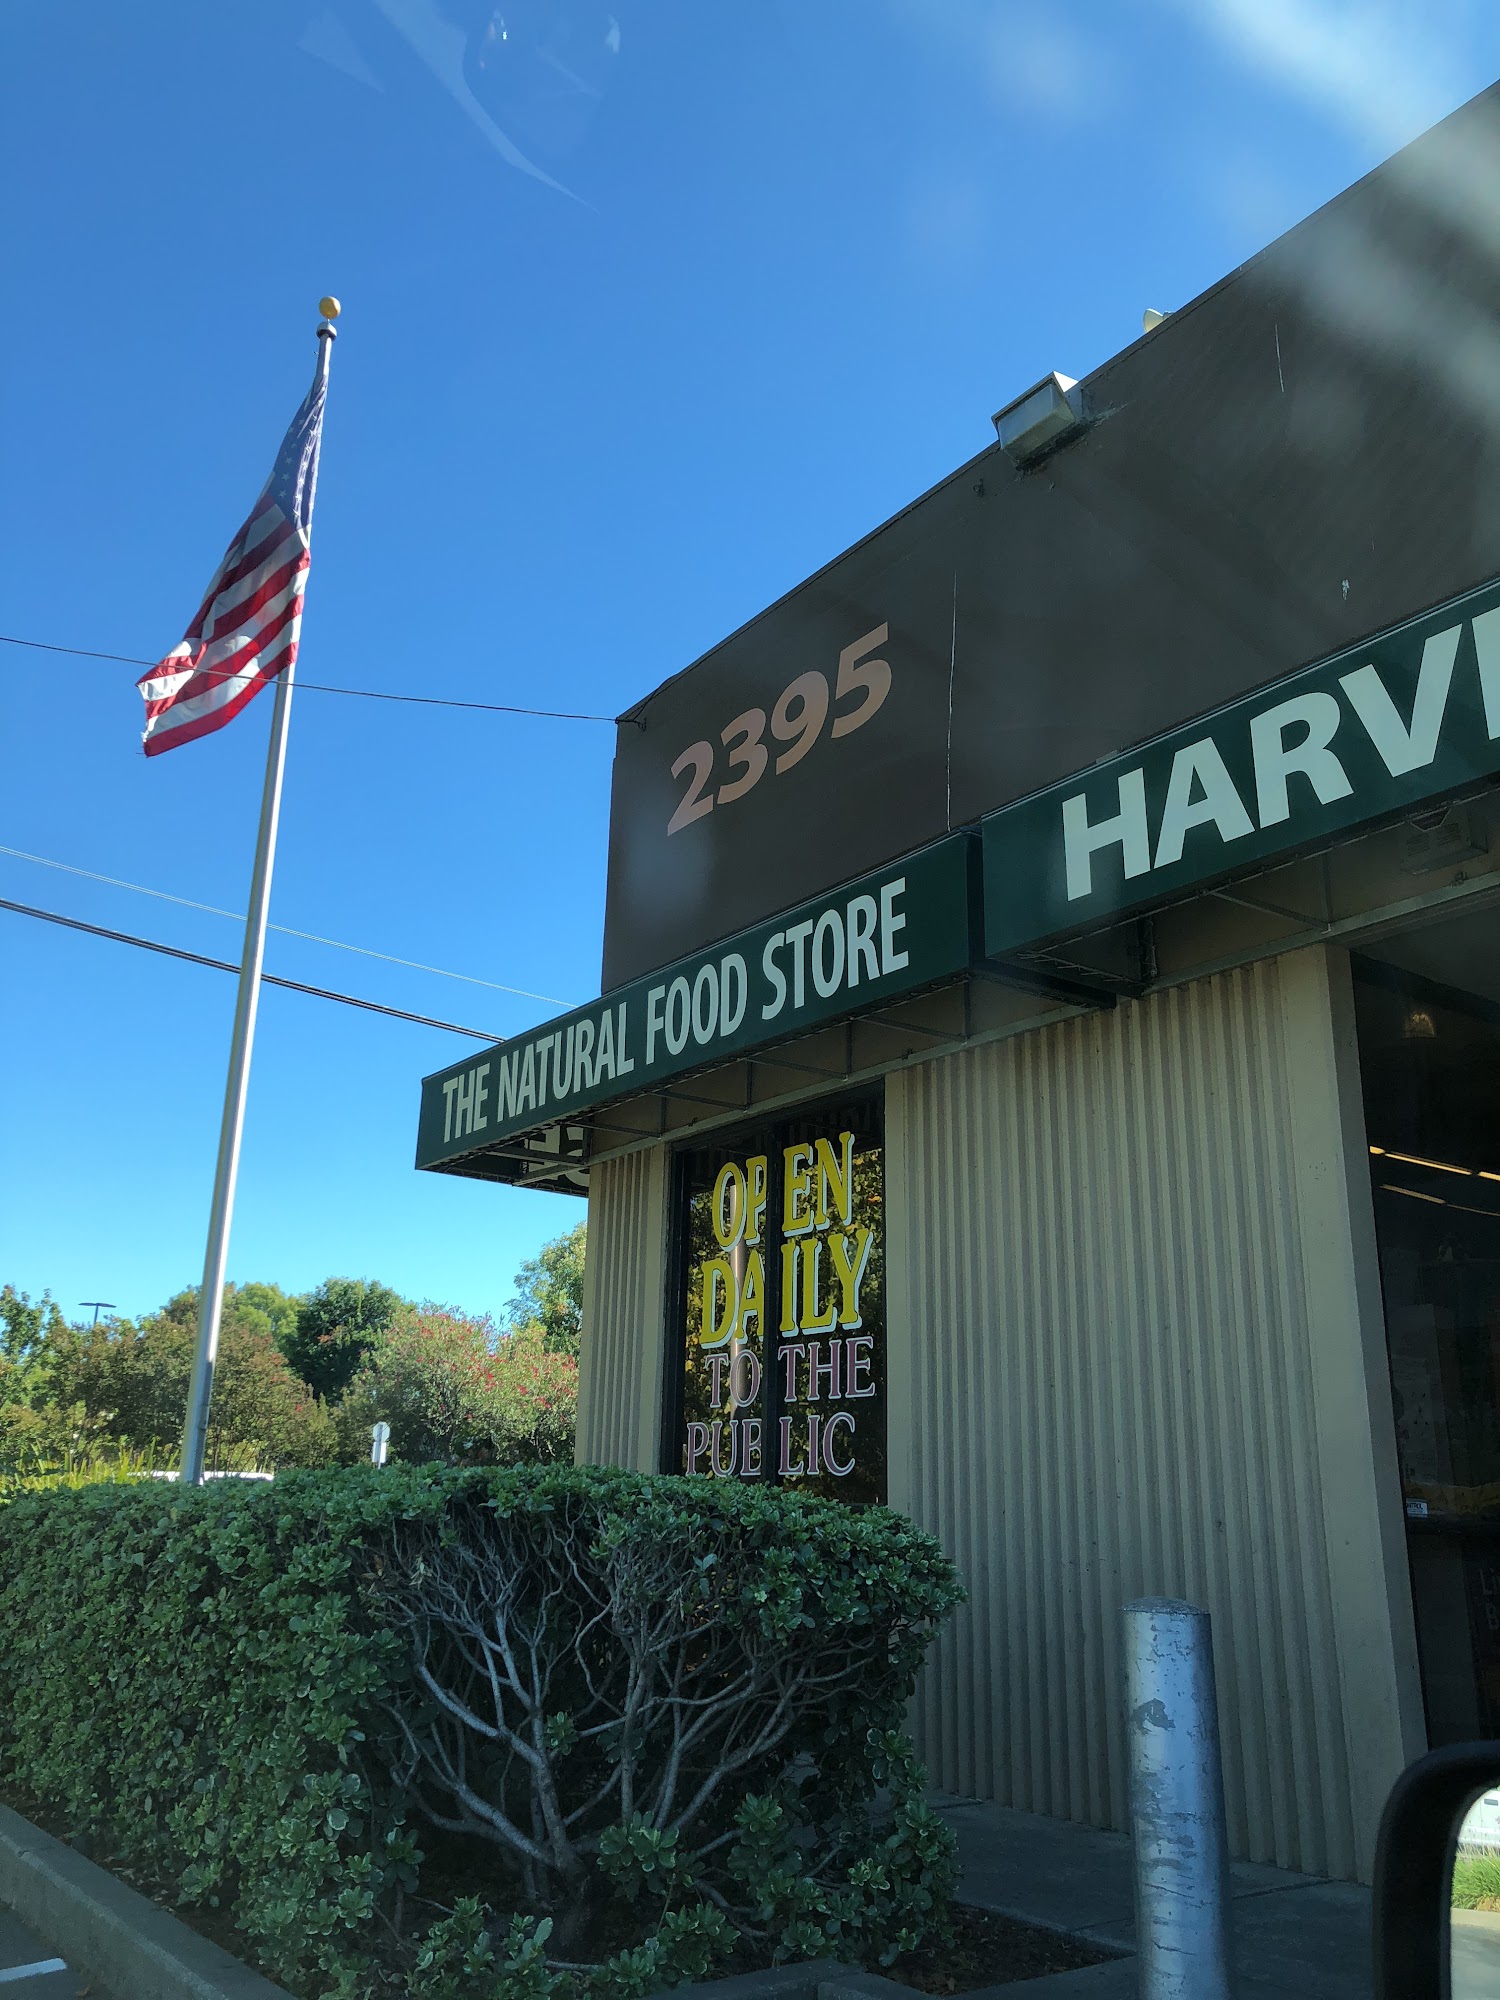 Harvest House